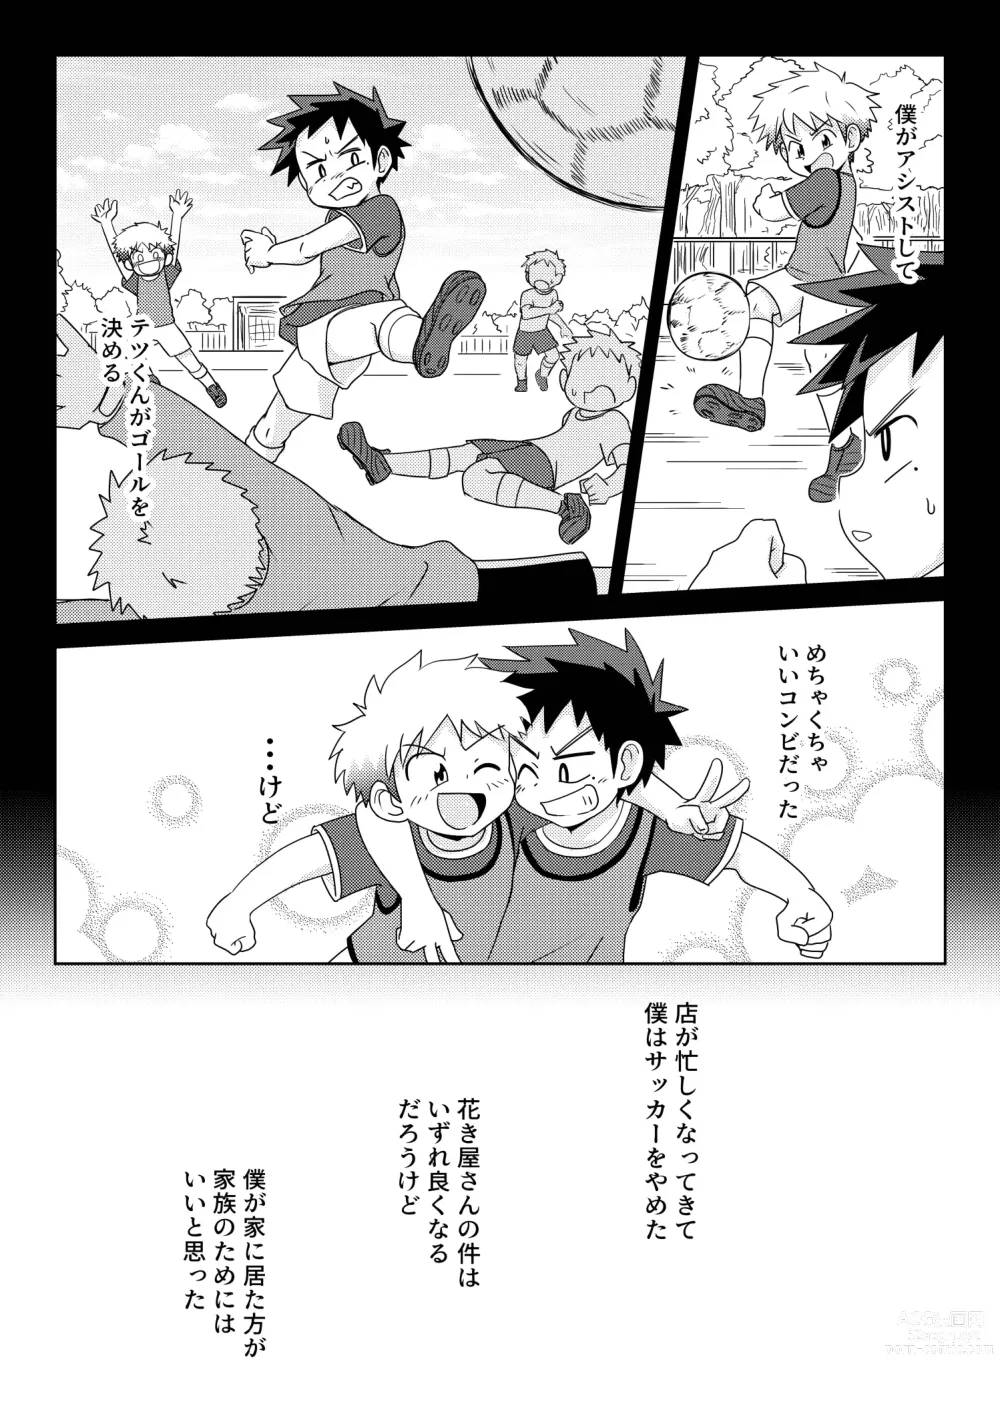 Page 21 of doujinshi Boku wa hanaya no musuko Introduction